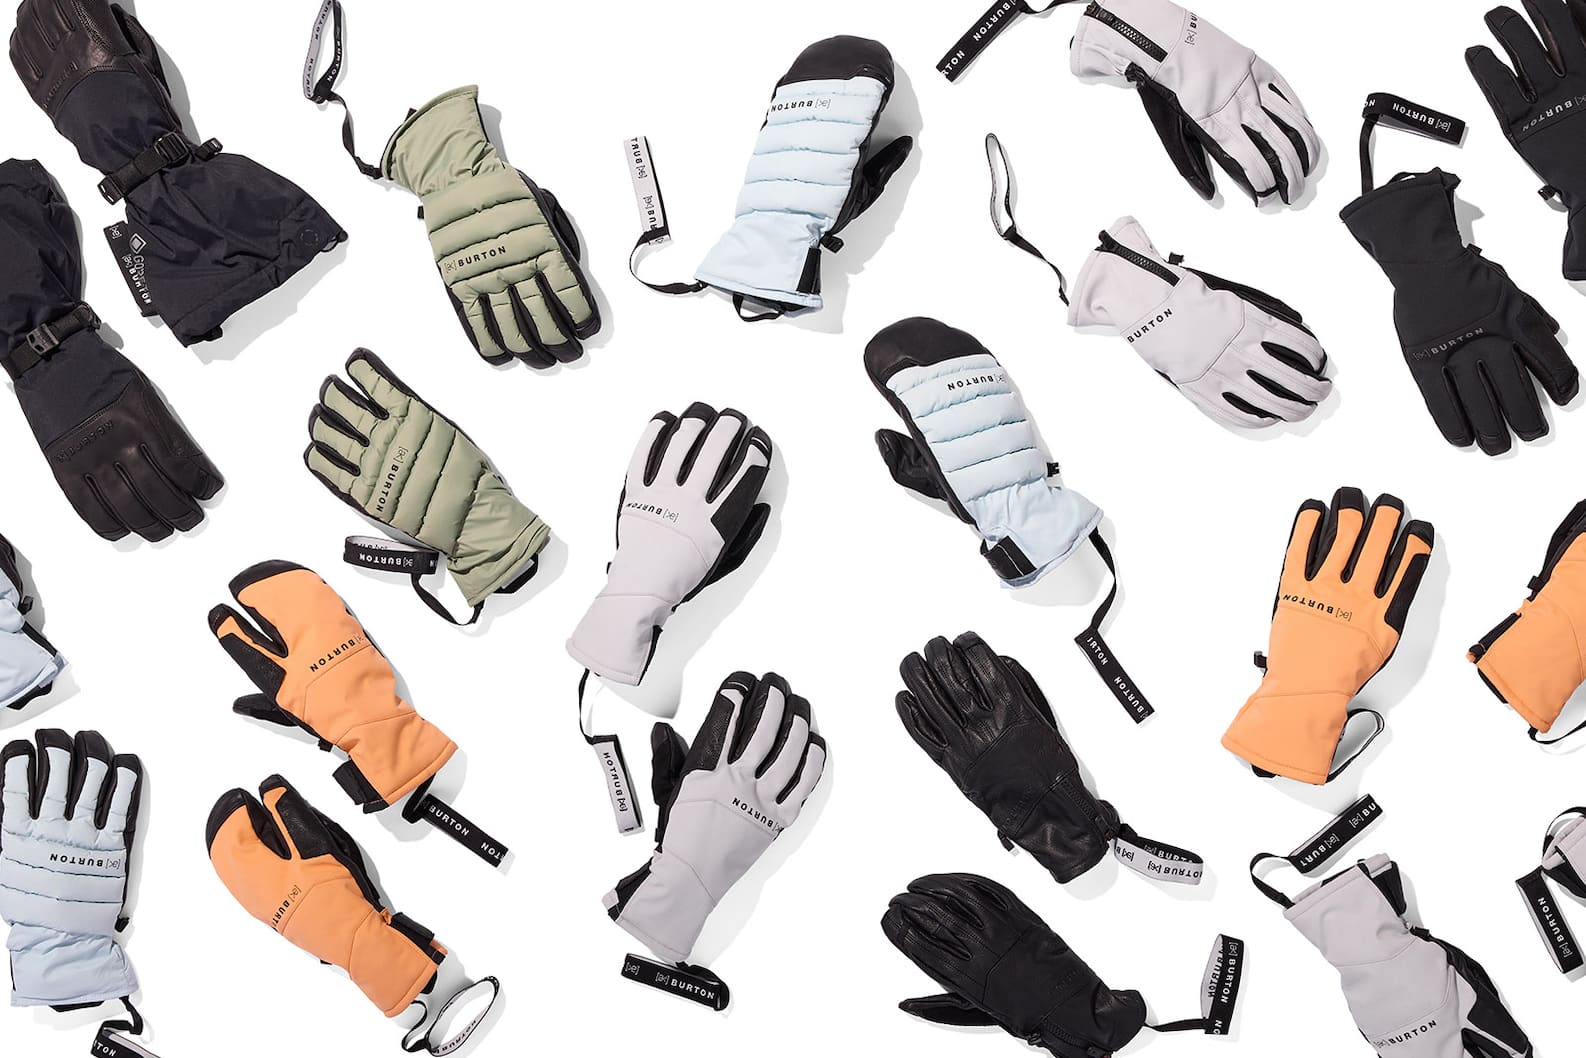 Burton's Official Snowboarding Gloves Buyer's Guide | Burton Snowboards